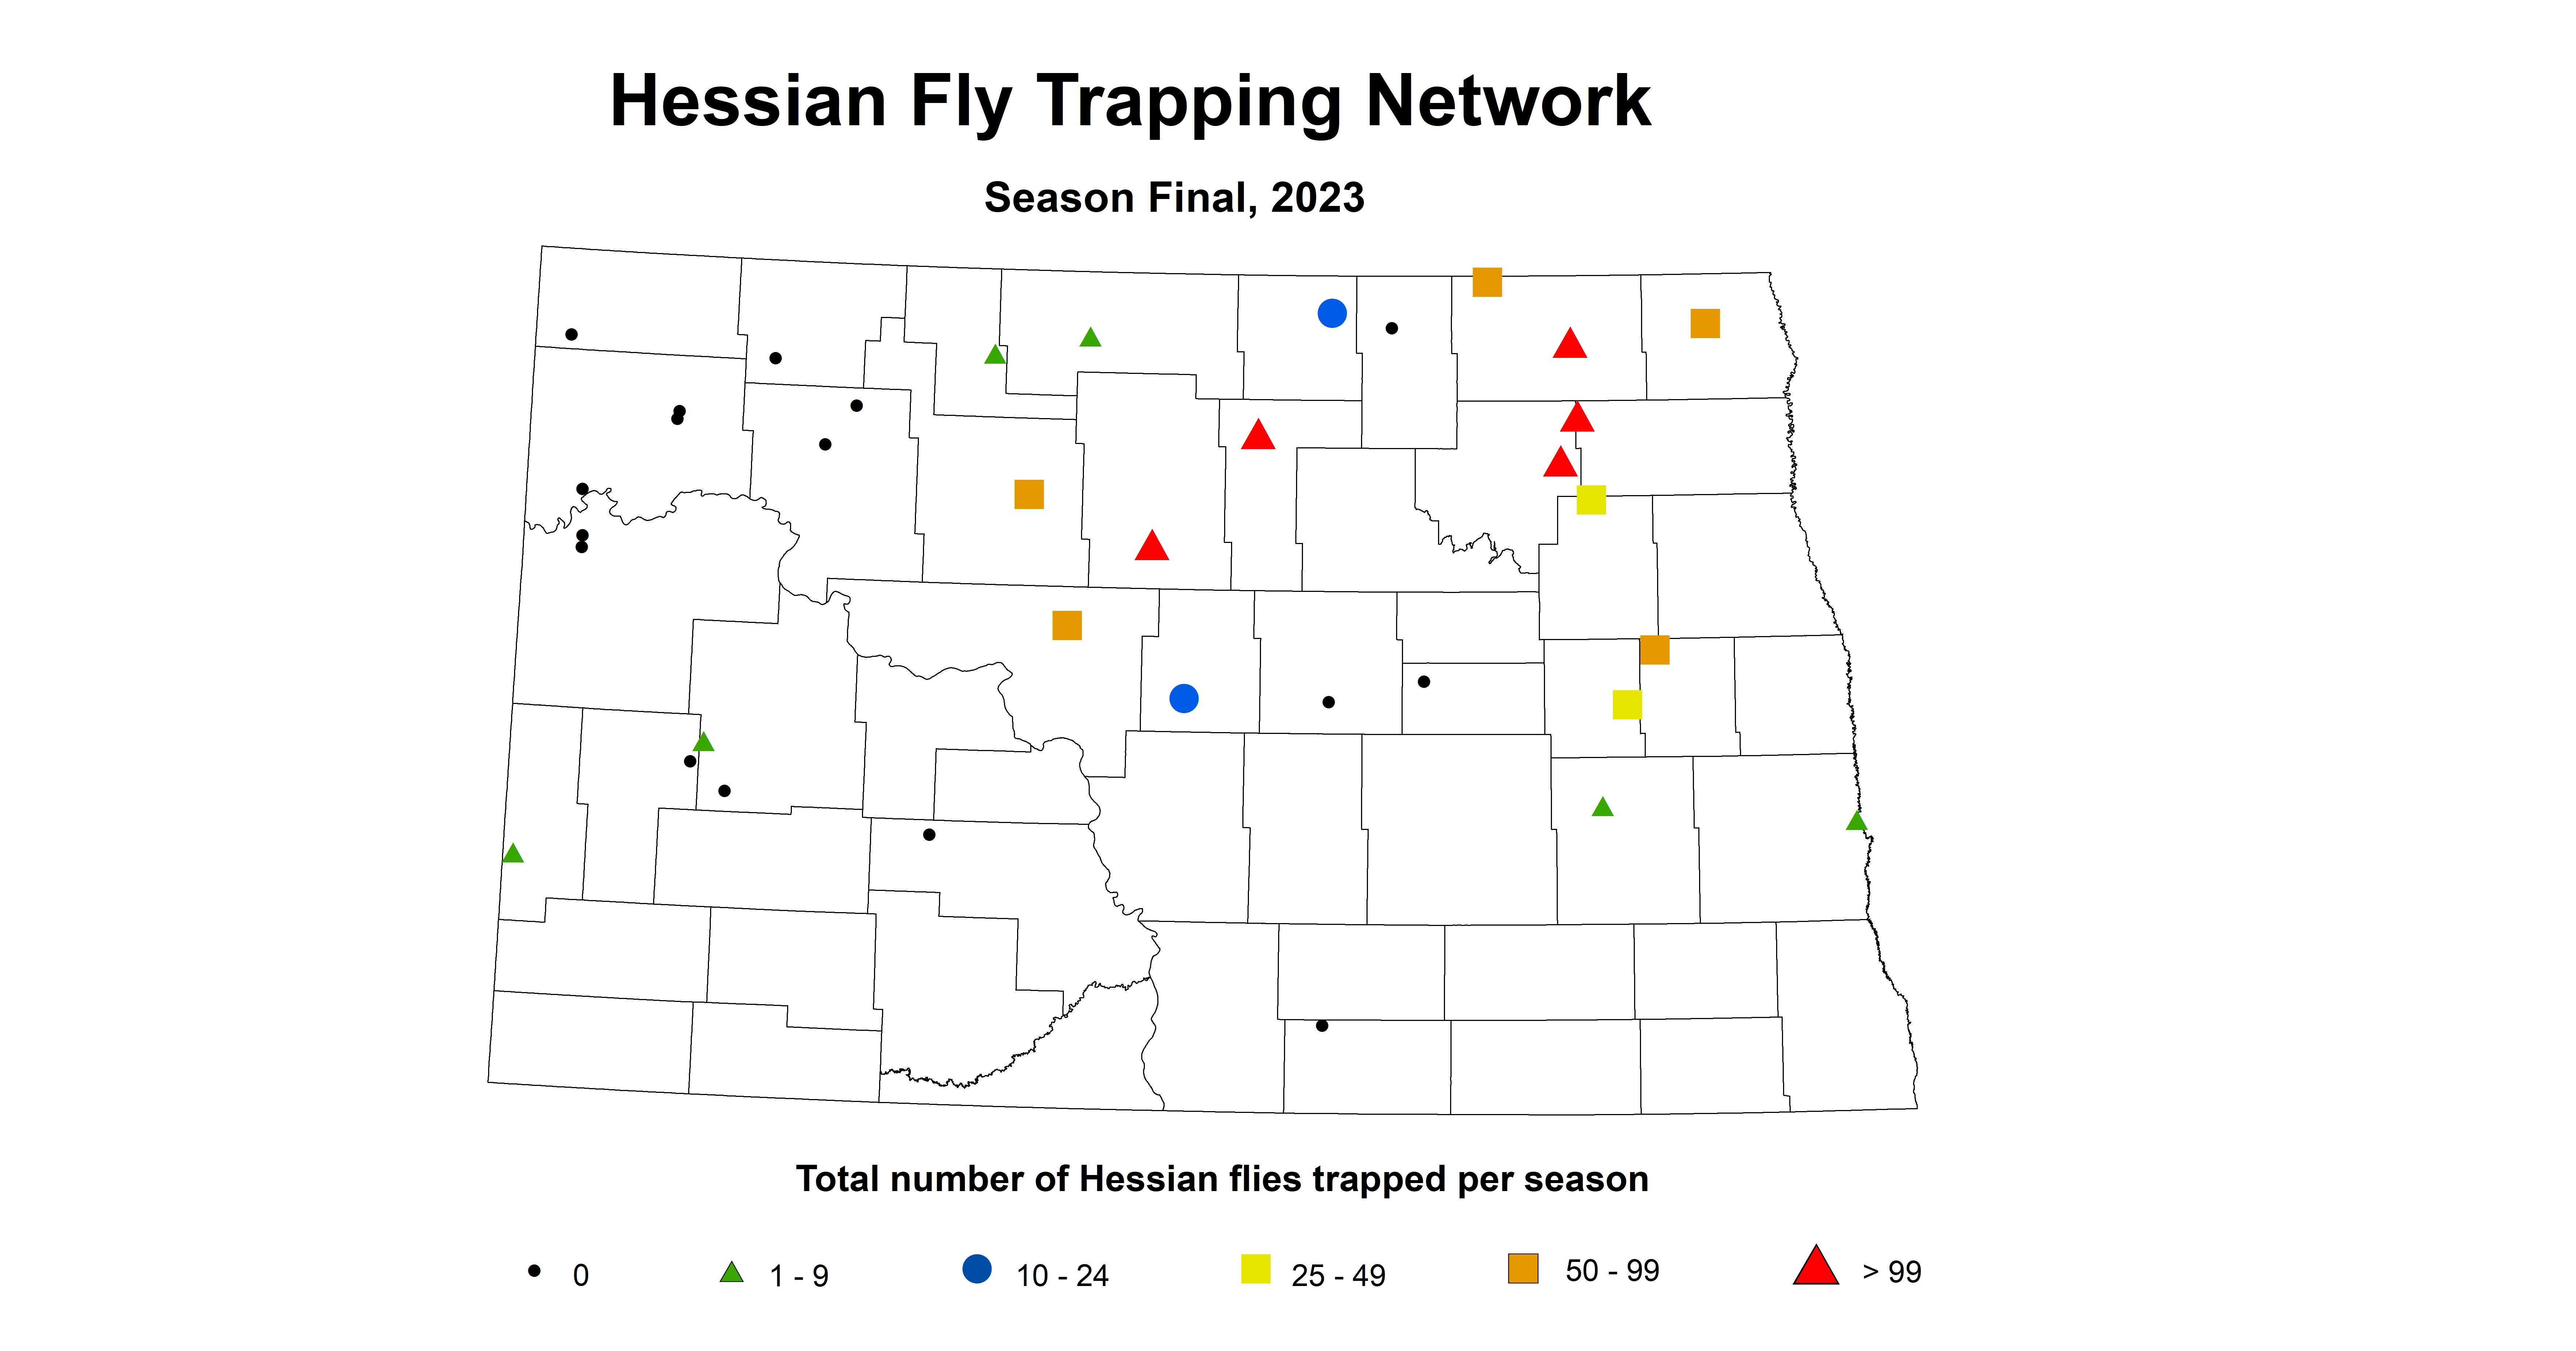 hessian fly season final 2023